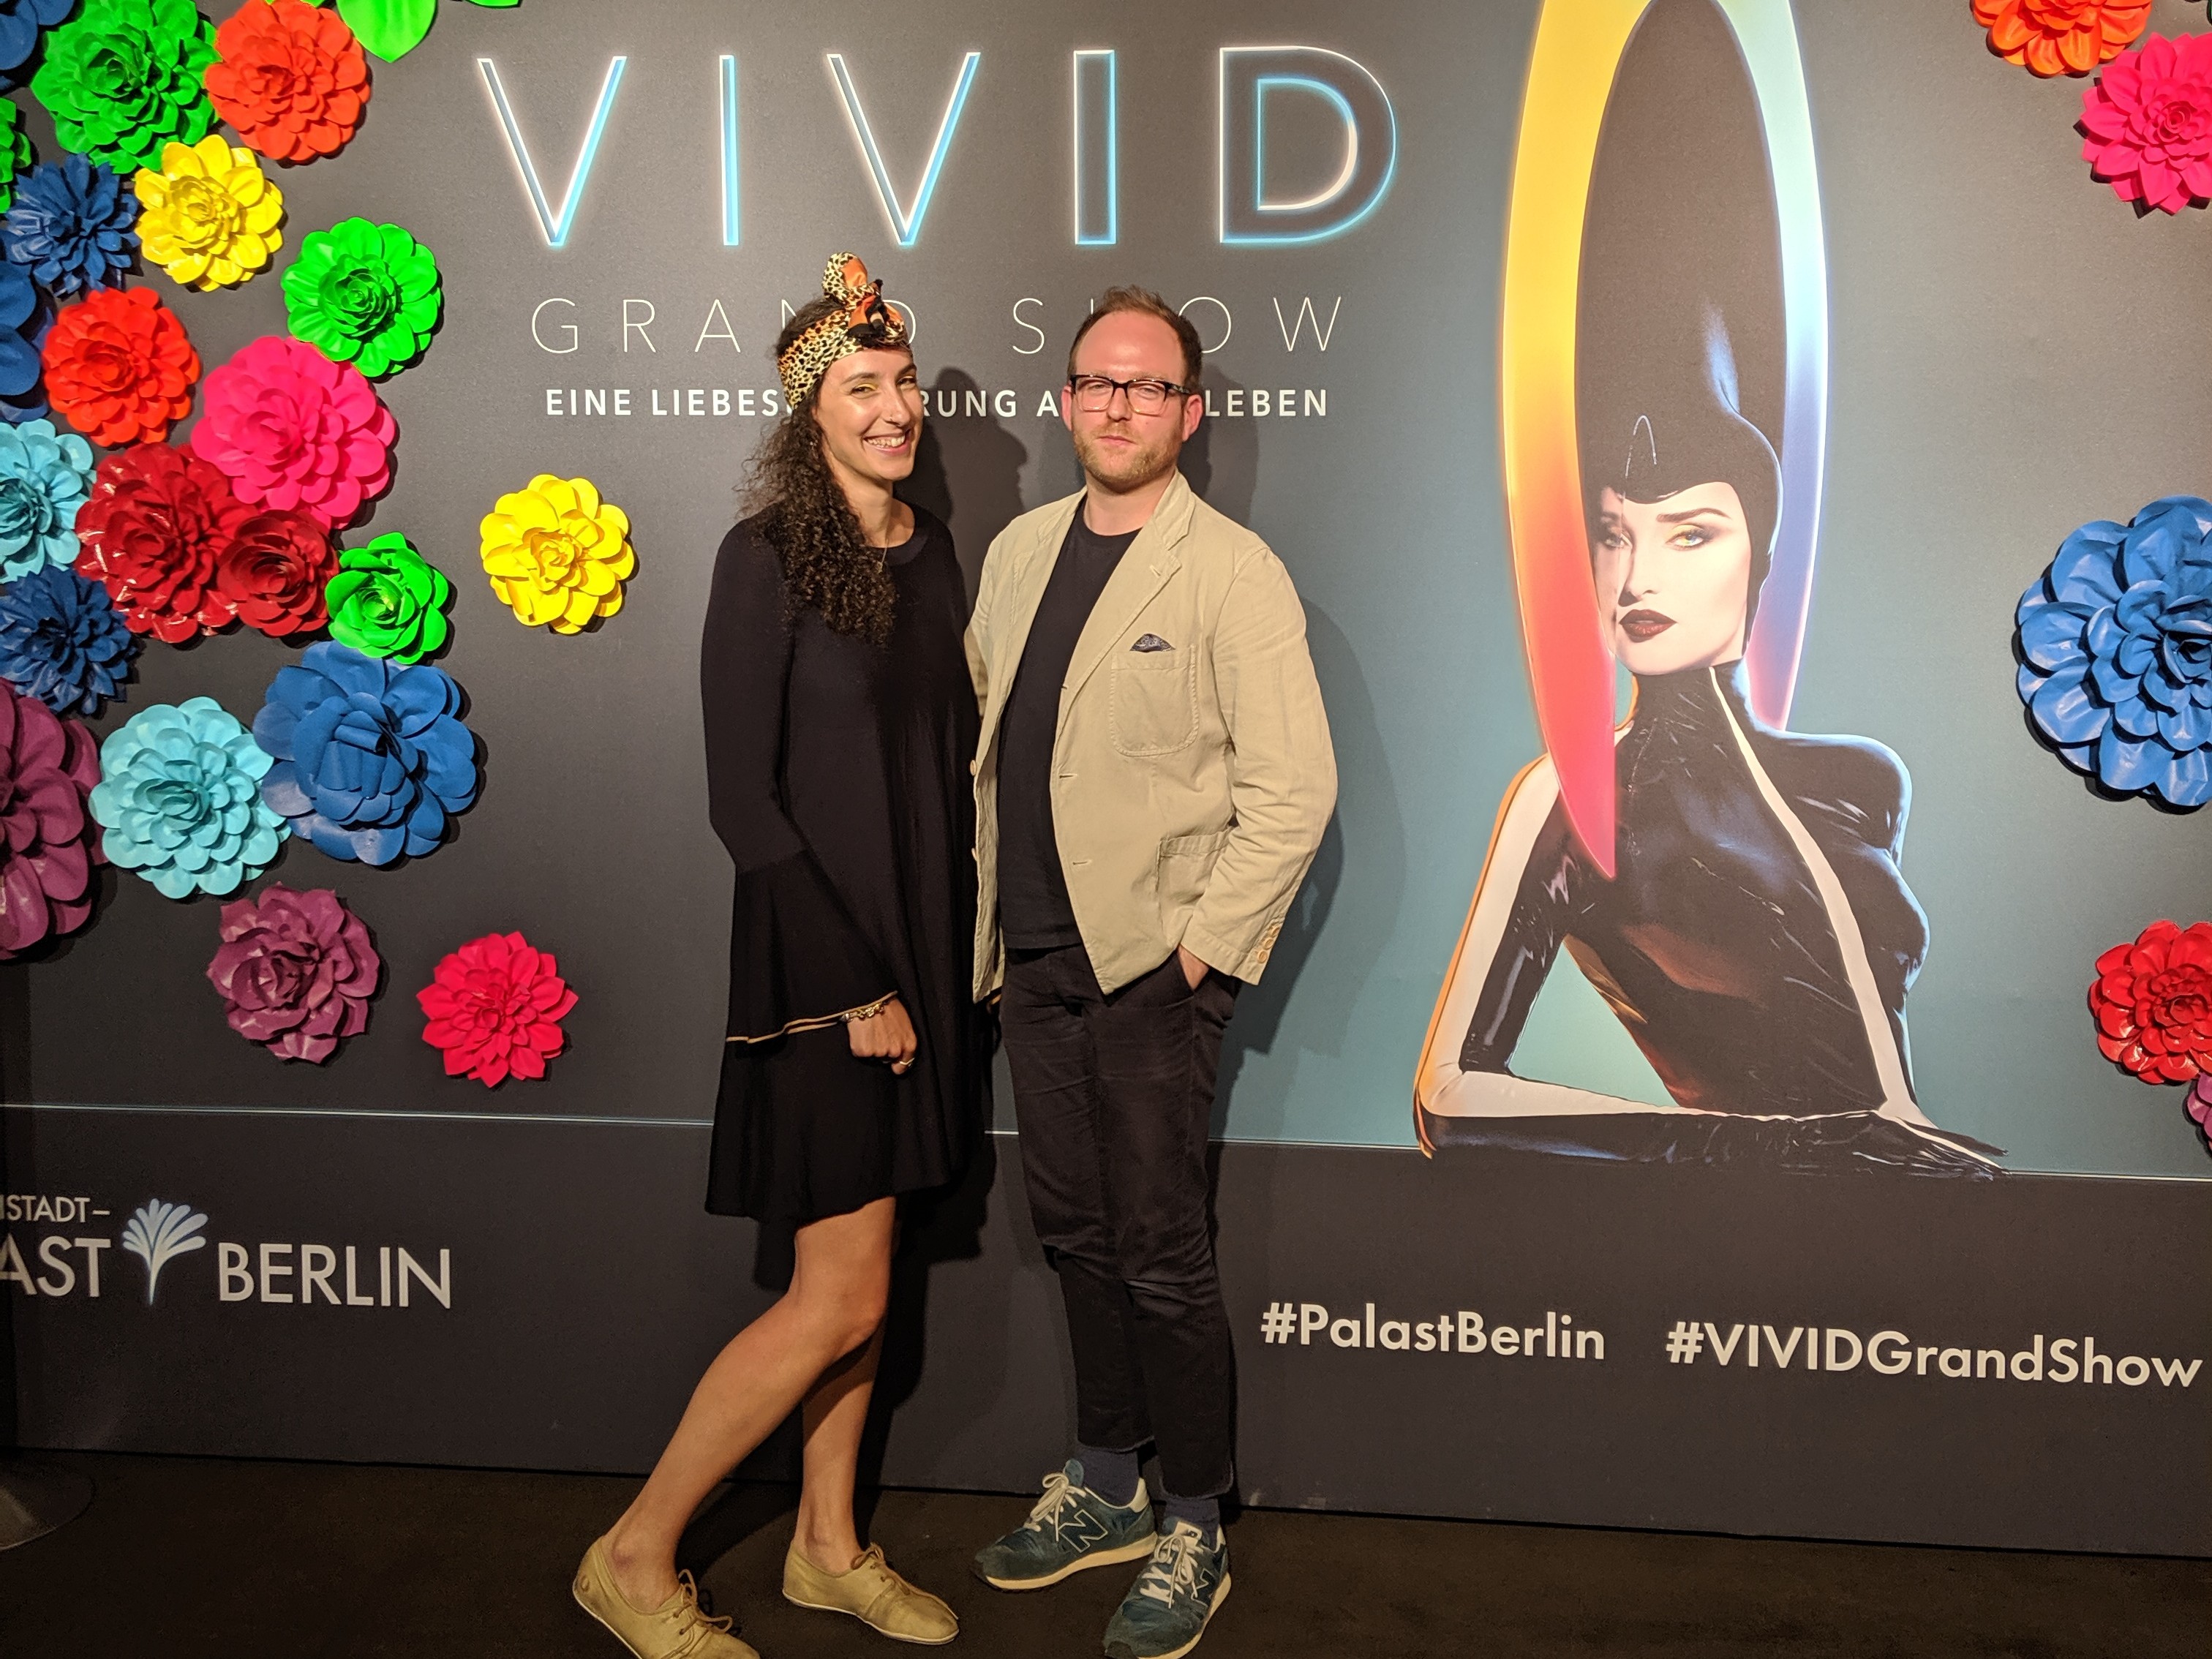 Jess and Tim at VIVID Grand Show Berlin